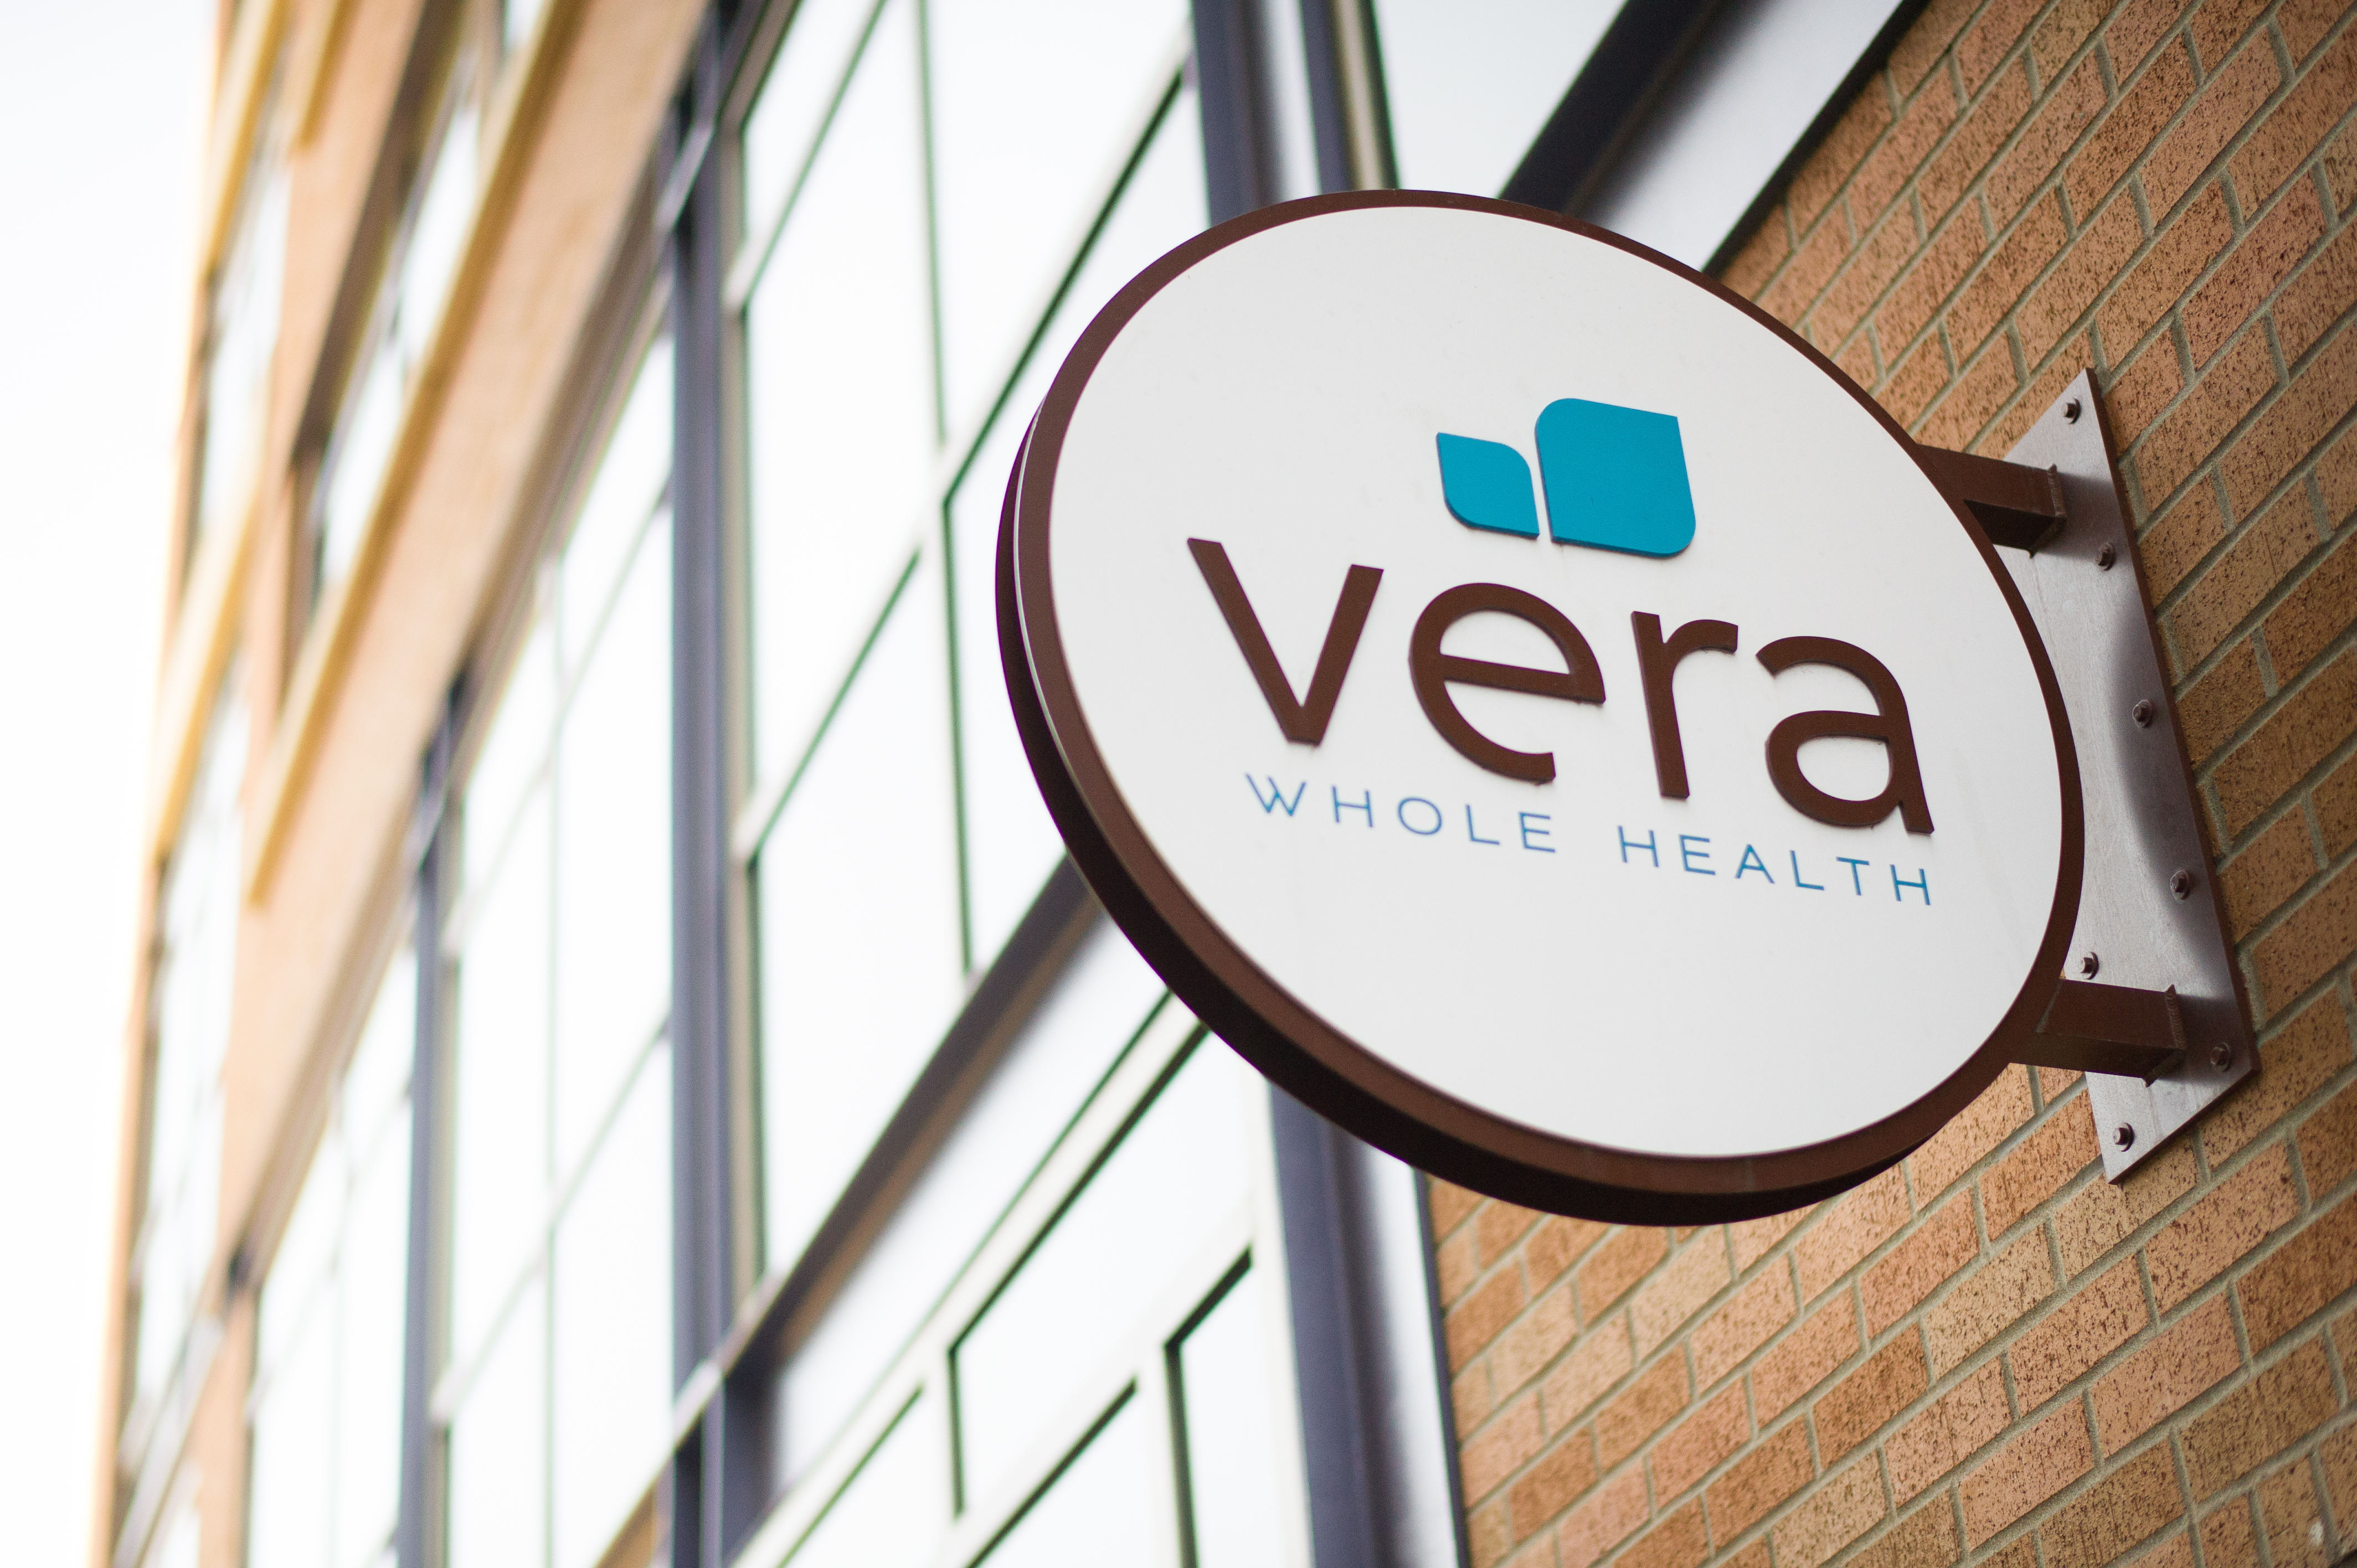 Vera Whole Health - vendor materials